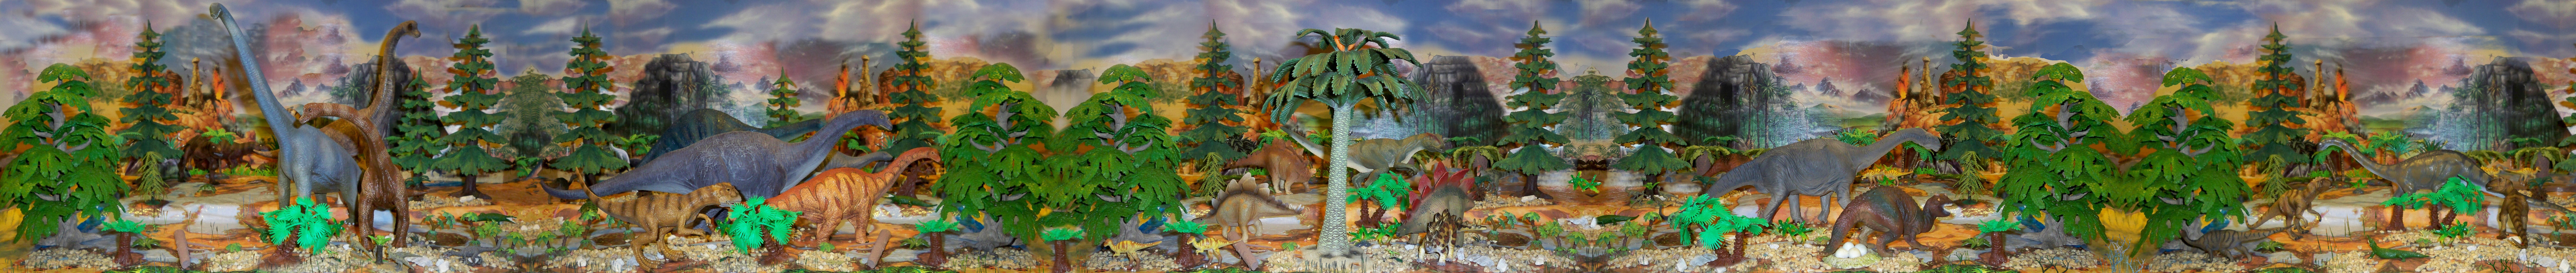 Schliech Replicasaurus Allosaurus, Schliech brachiosaurs, Schliech Allosaurus, Schleich apatosaurs,Melbourne Museum dryosaur(Leaellynasaura), Safari Toob Chamatosaurus, Dinowaurs Coelurus(Compsognothus), Melbourne Museum dryosaur(Leaellynasaura), Schliech stegosaurs, Schliech Replicasaurus Allosaurus, CollectA Marshosaurus(Lourinhanosaurus), CollectA dryosaur(Hypsilophodon), Kaiyodo Camarasaurus, Schliech Replicasaurus Ceratosaurus, CollectA Camptosaurus, Schliech Junior Allosaurus and Invicta Diplodocus.